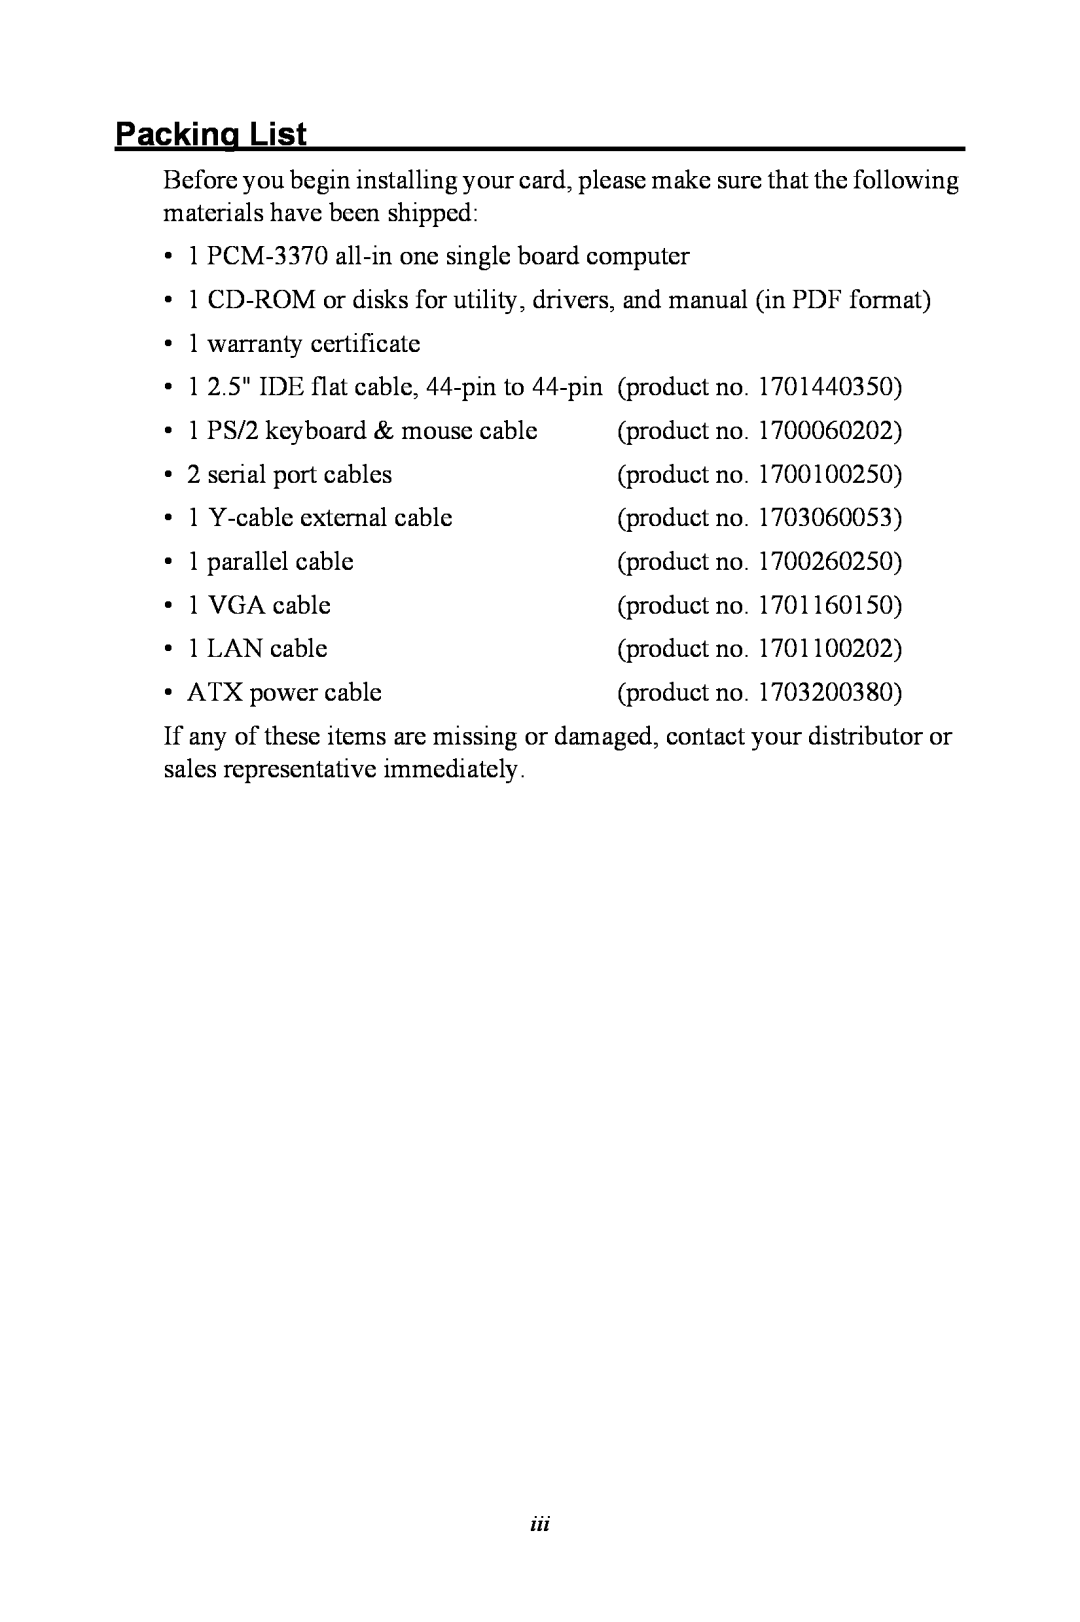 Intel PCM-3370 user manual Packing List 